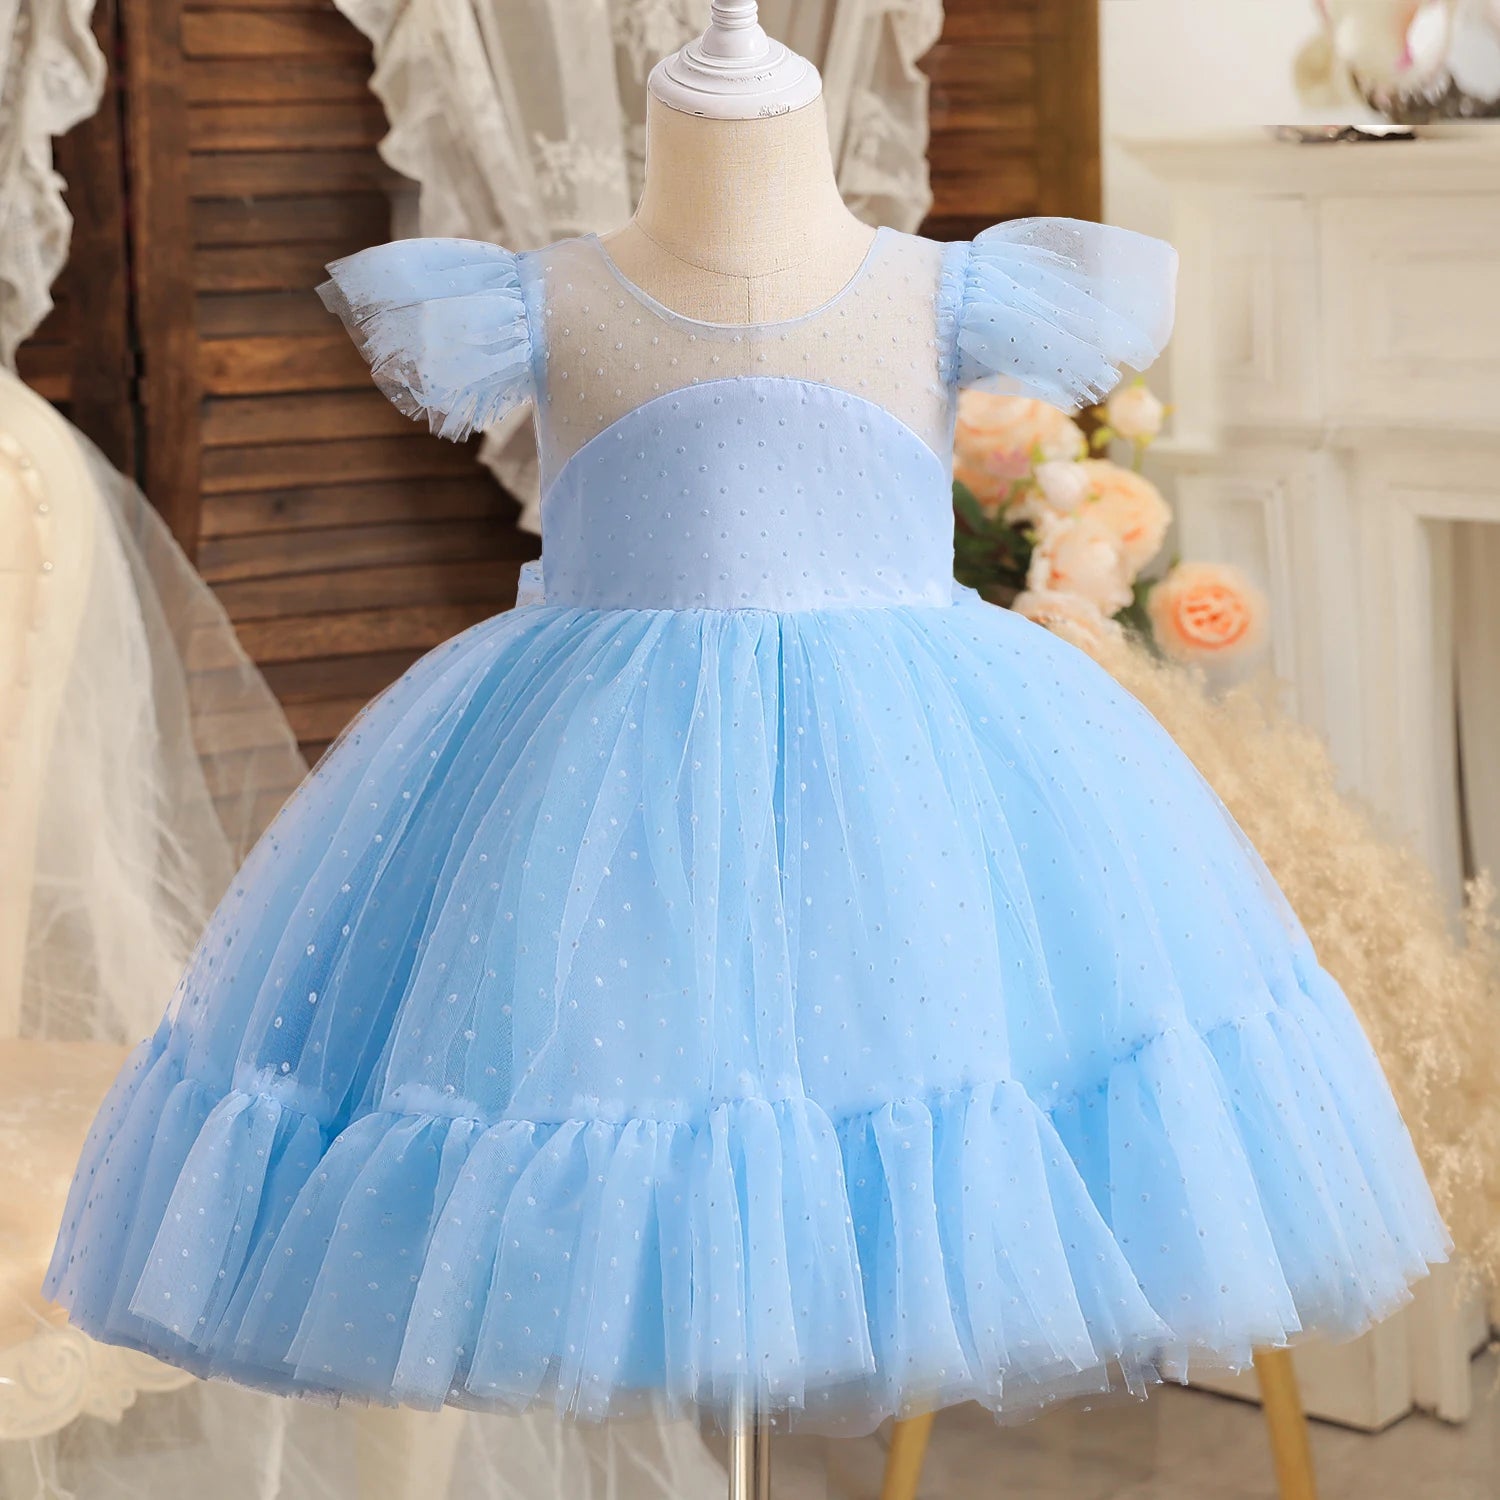 Elegant Dress for Evening Party Princess Gown Blue by Baby Minaj Cruz